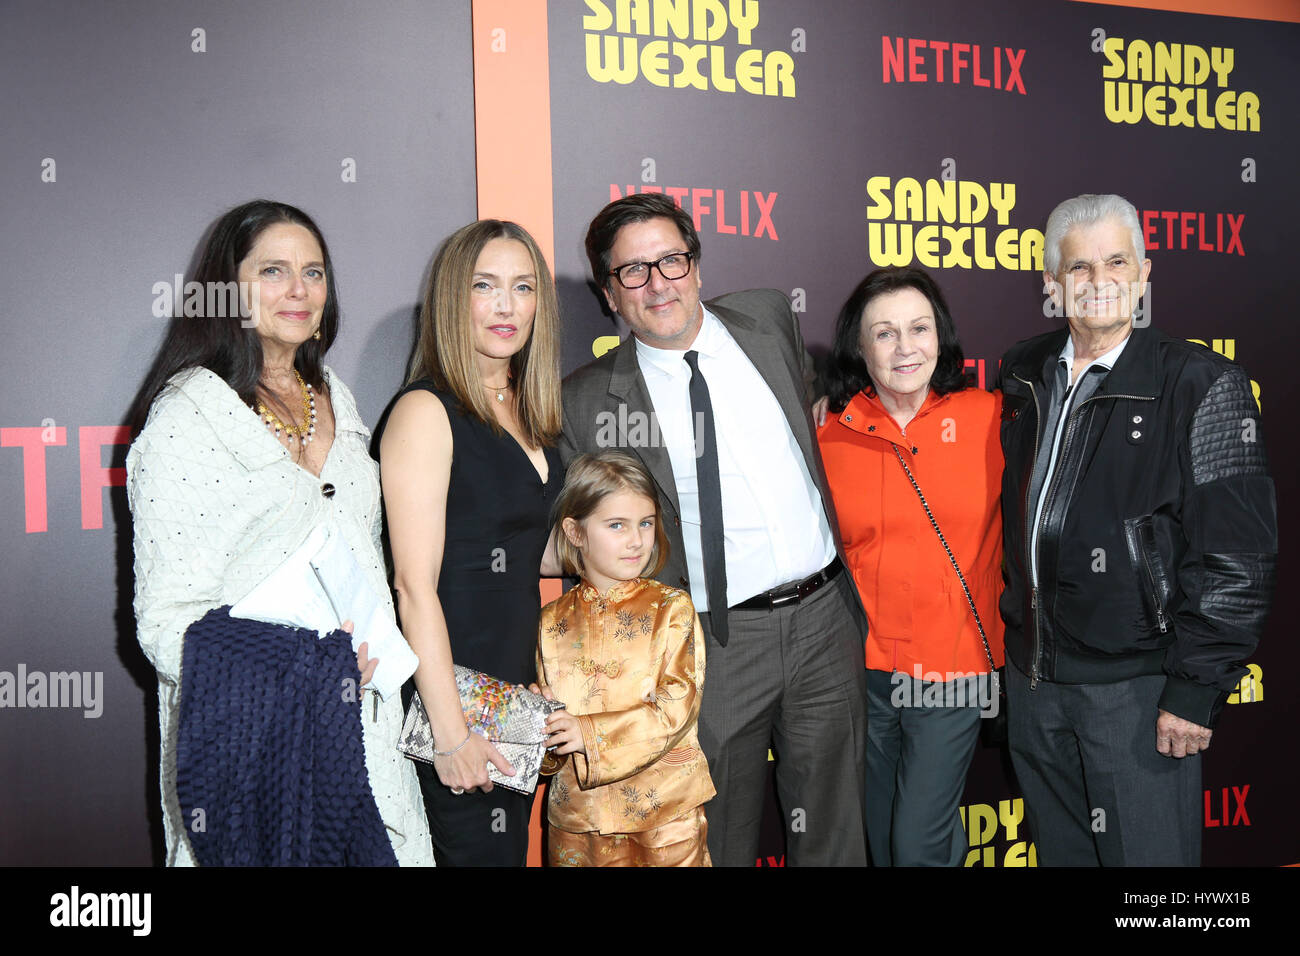 Los Angeles, USA. 6th Apr, 2017. Steven Brill, the premiere of Netflix's 'Sandy Wexler'. Photo Credit: PMA/AdMedia Credit: Pma/AdMedia/ZUMA Wire/Alamy Live News Stock Photo